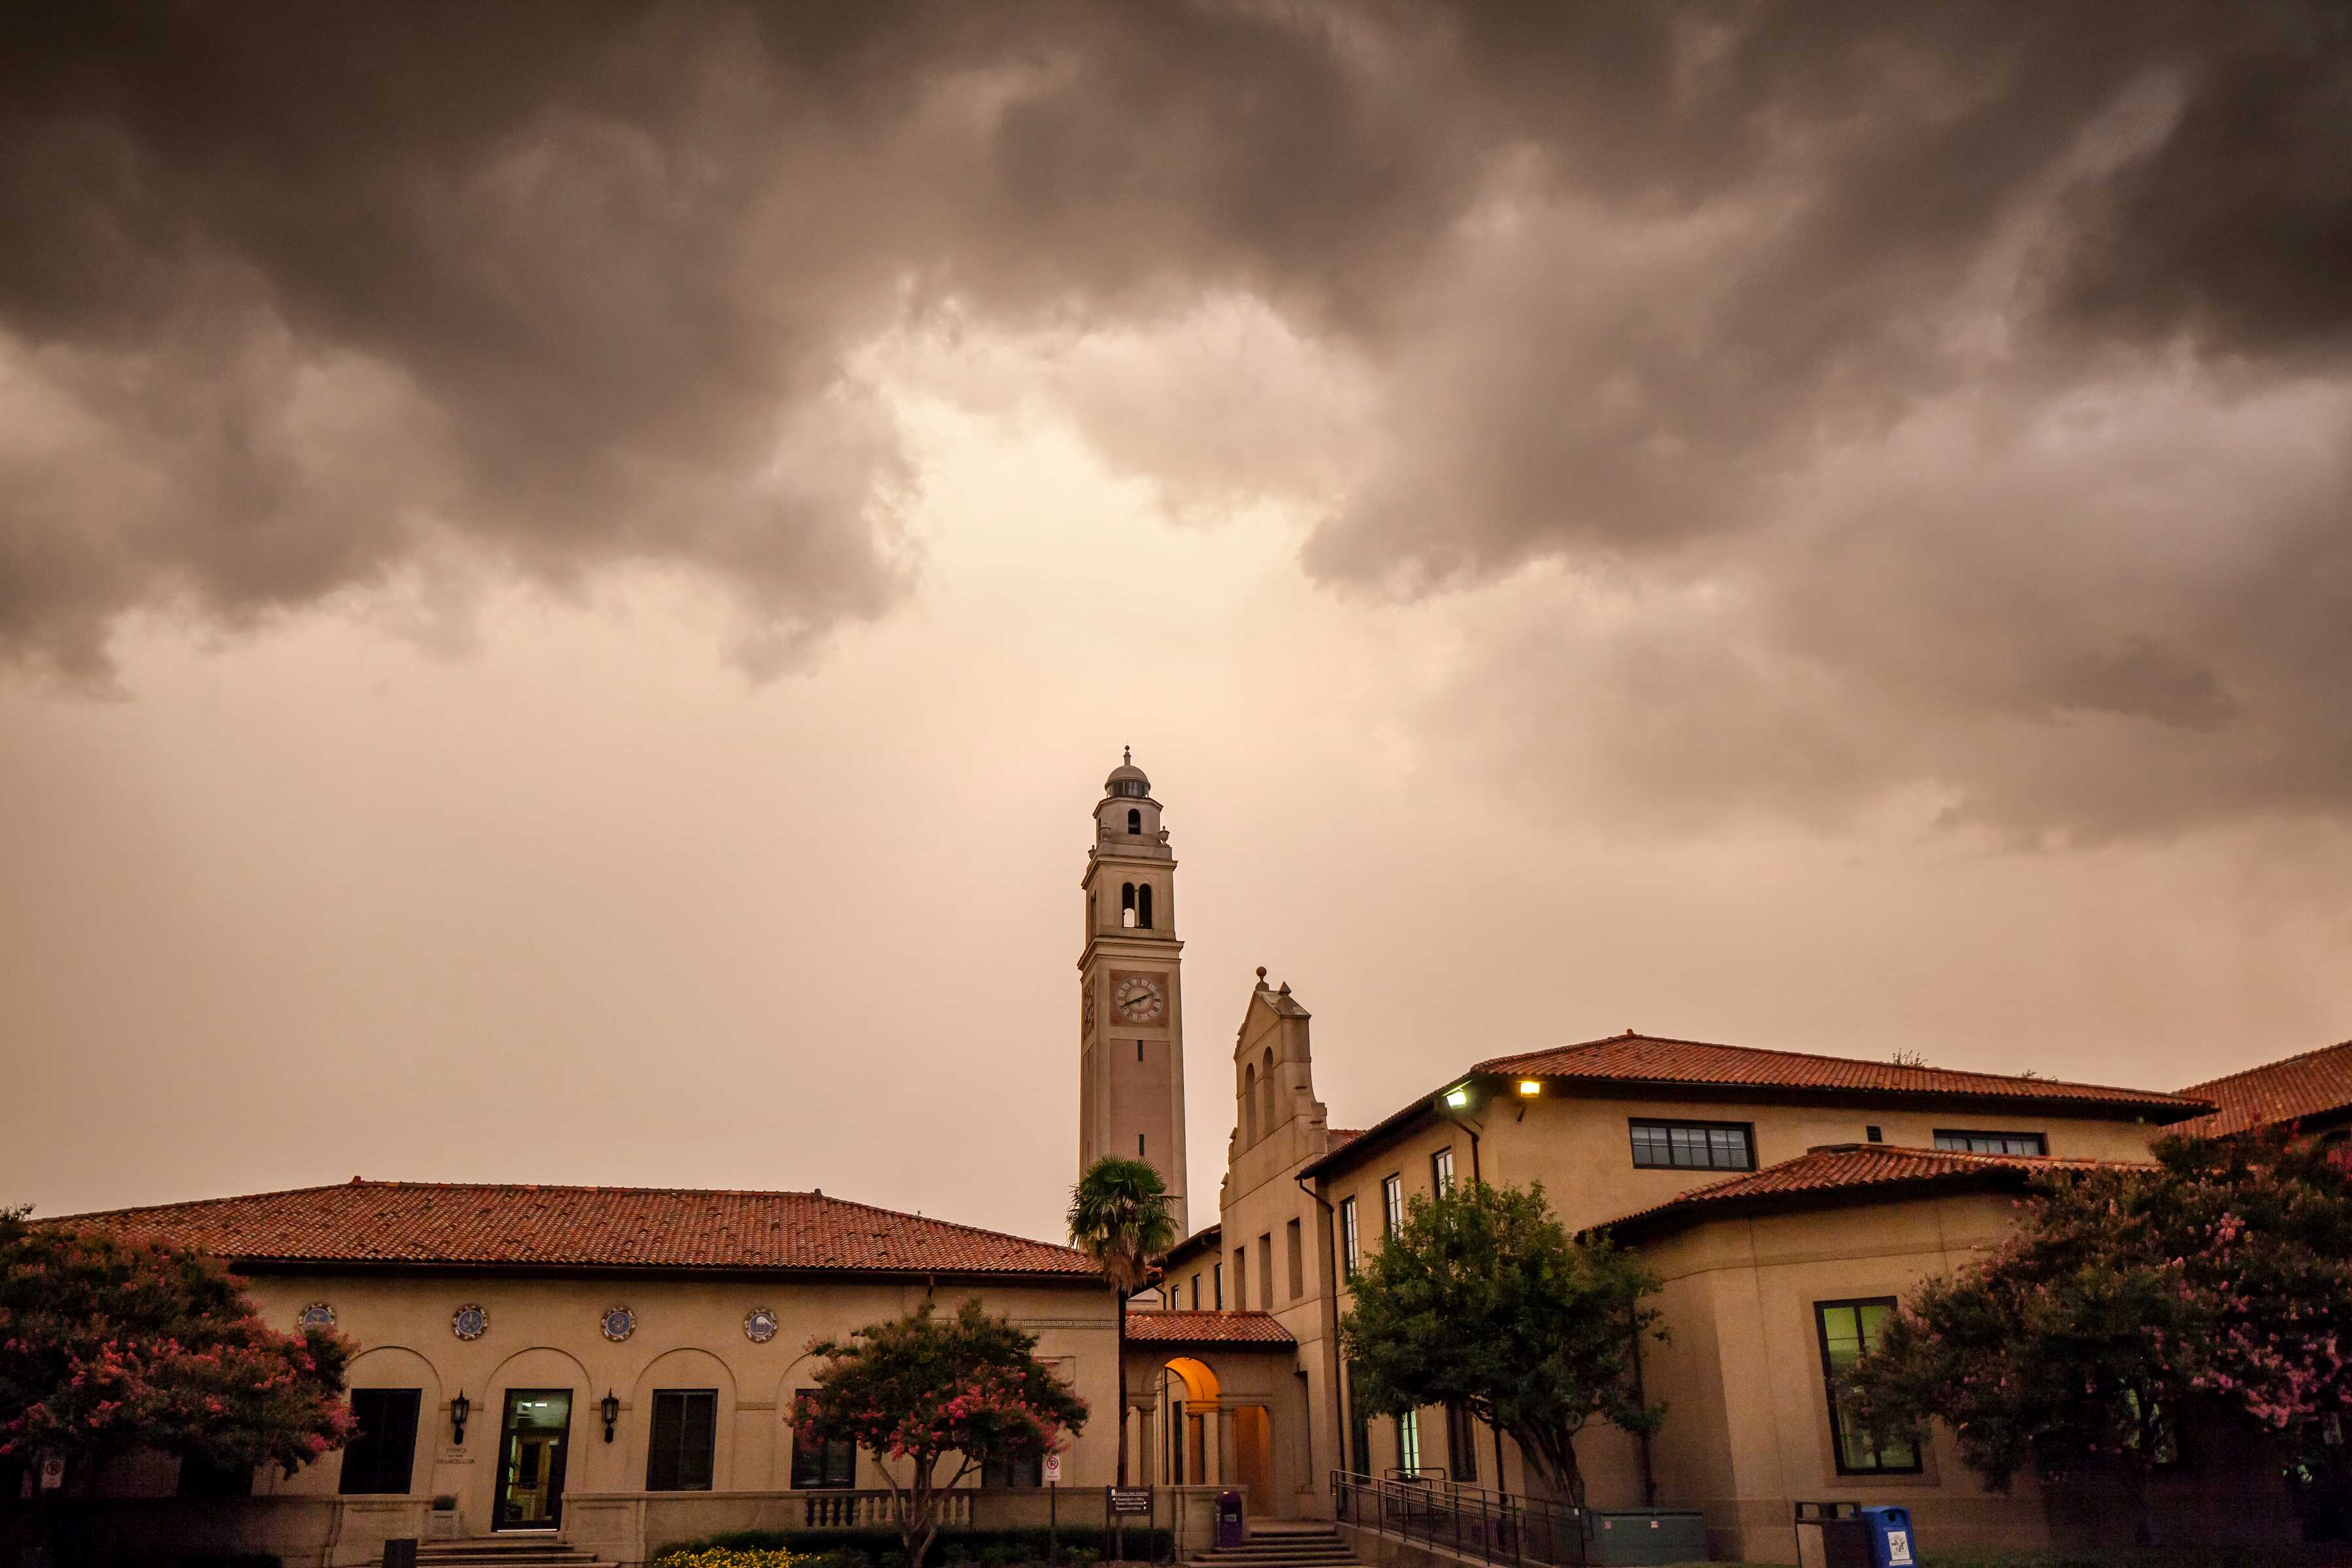 Memorial Tower under a stormy sky.